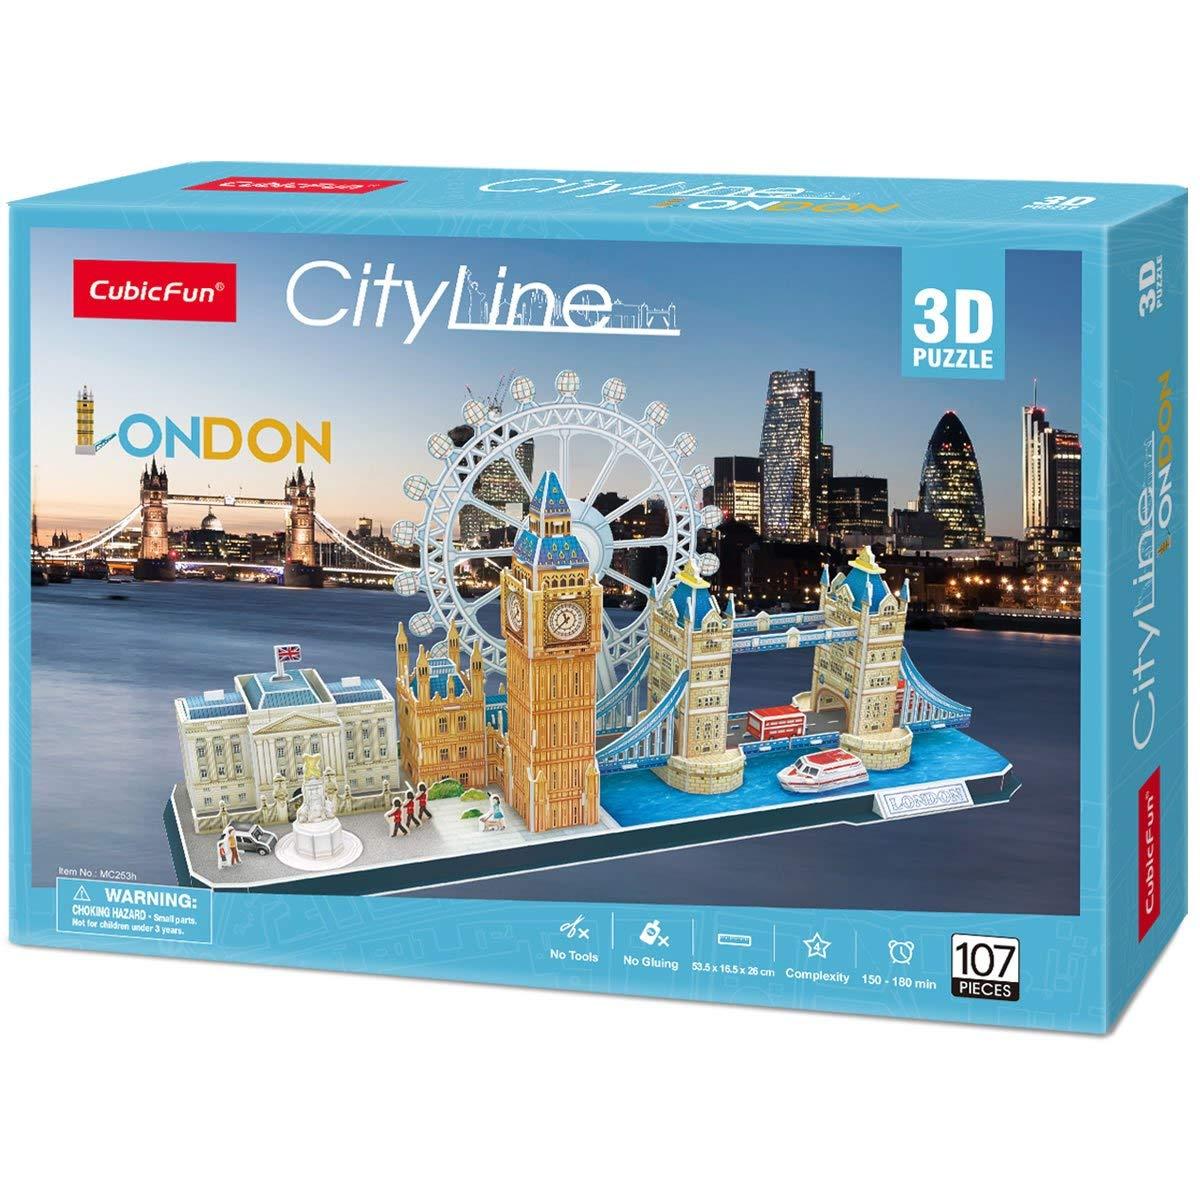 CityLine London 3D Puzzle CubicFun ตัวต่อ โมเดล จำลองเมืองอังกฤษ จิ๊กซอว์ตัวต่อ สามมิติ สวยงามสมจริง #MC253h